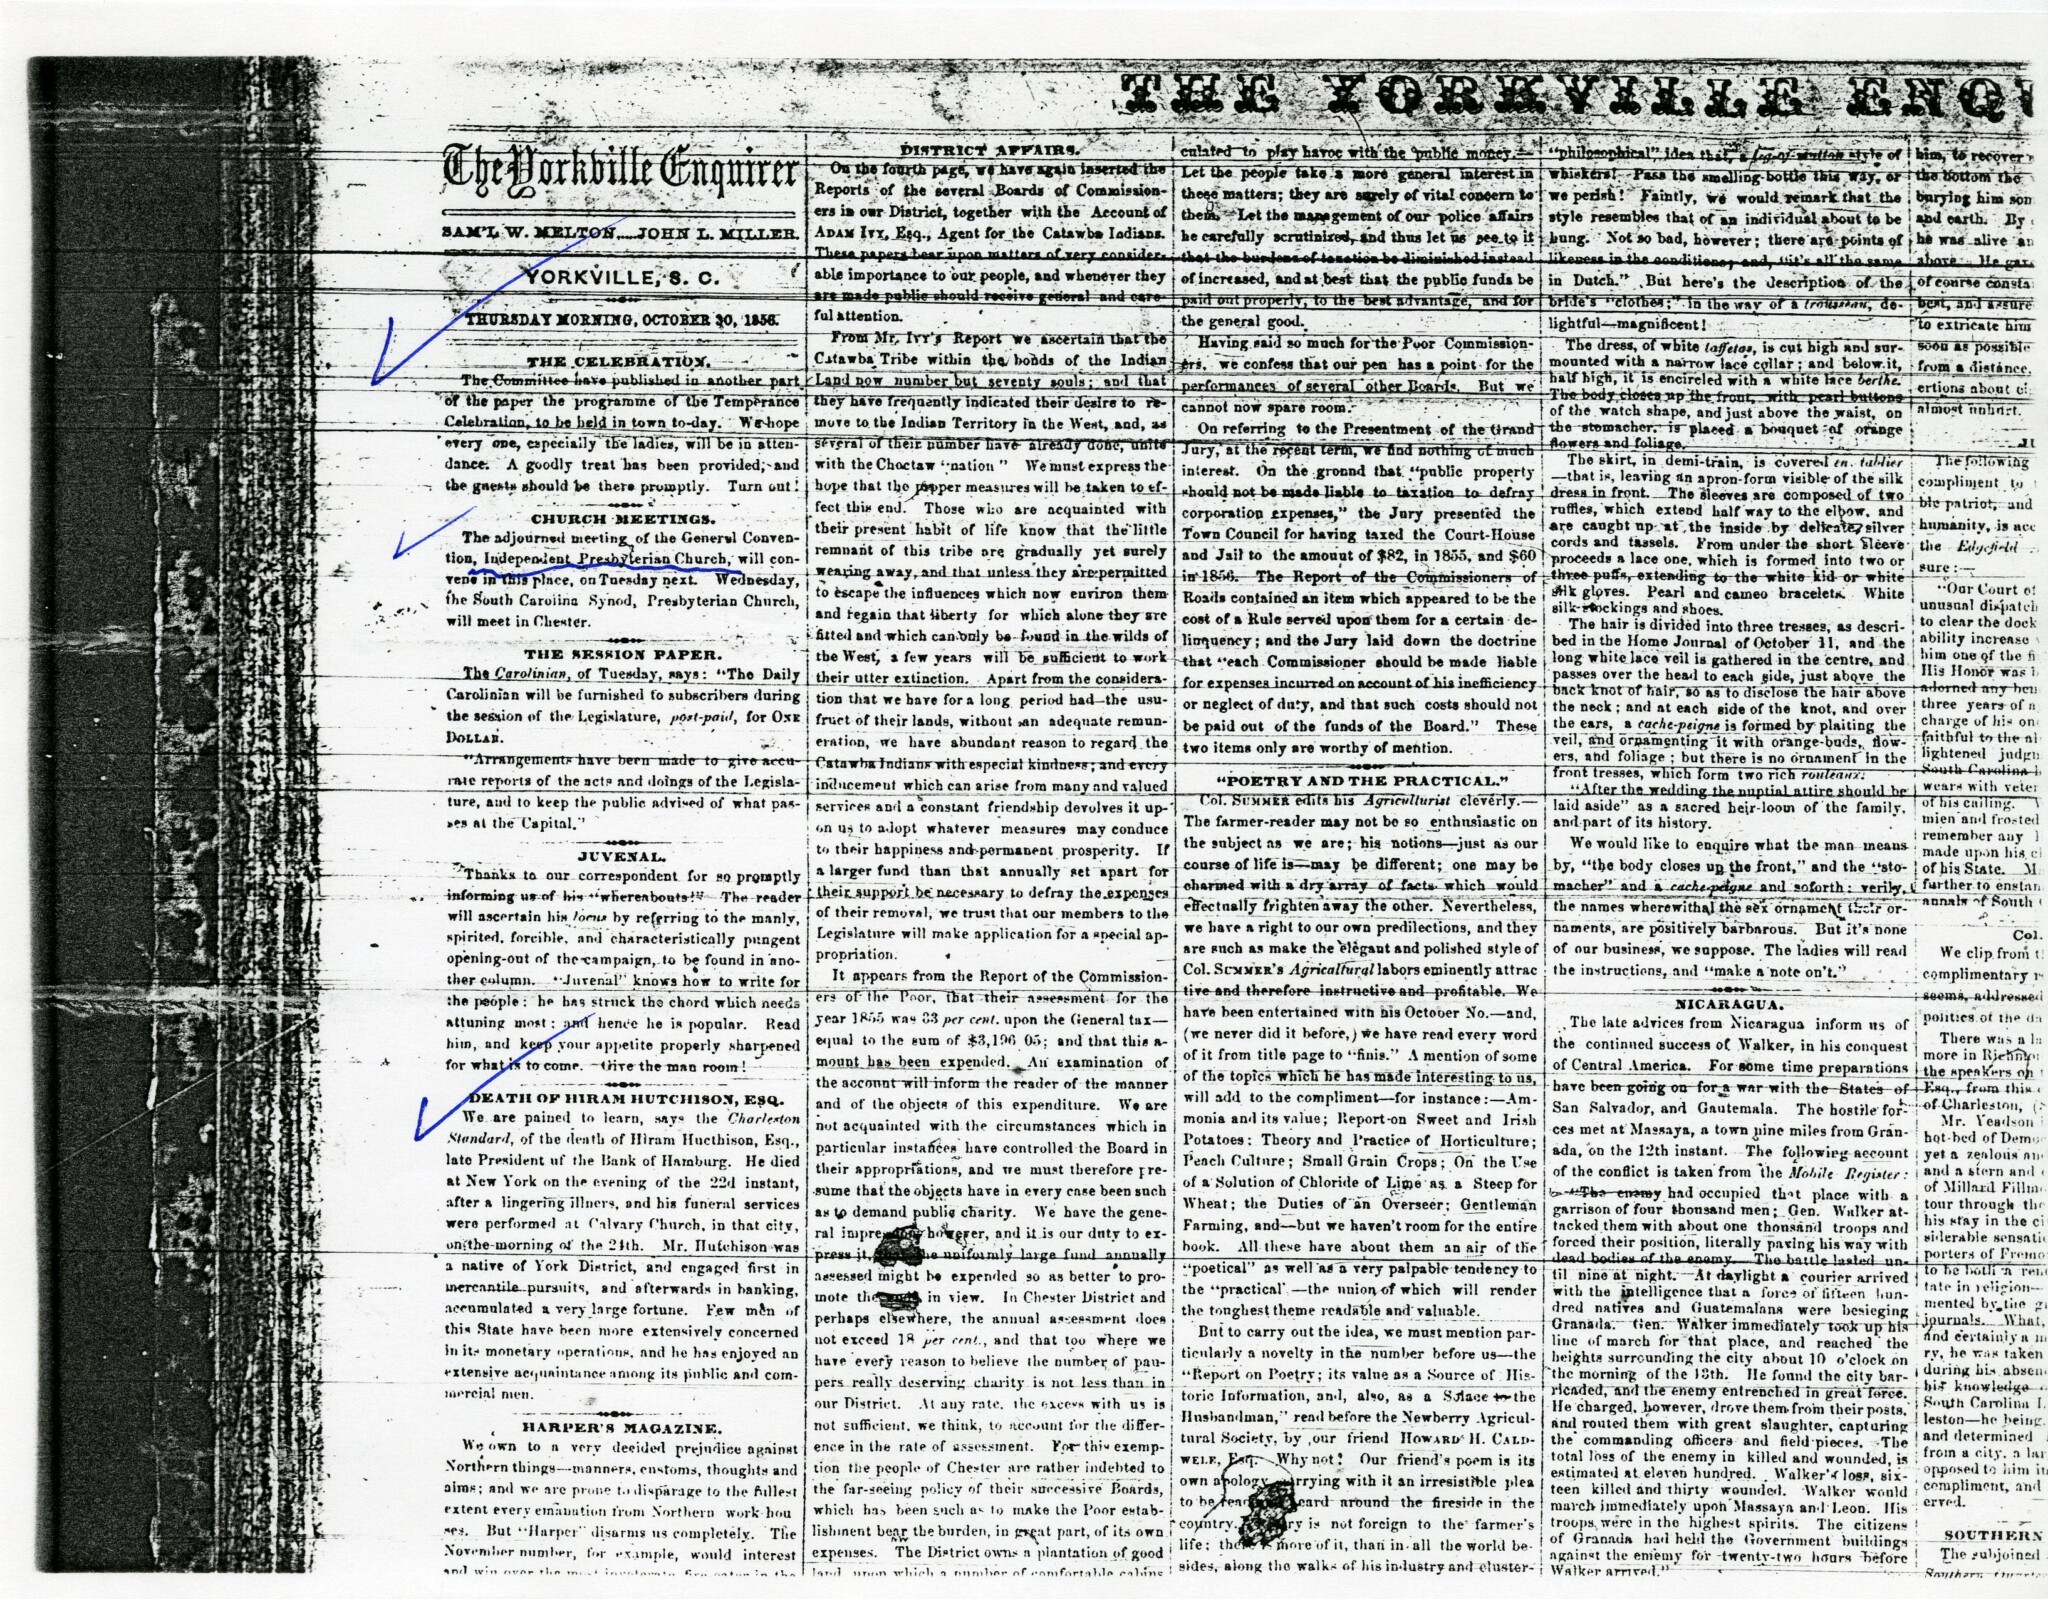 OBIT OF HIRAM HUTCHISON IN NEW YORK, 1856